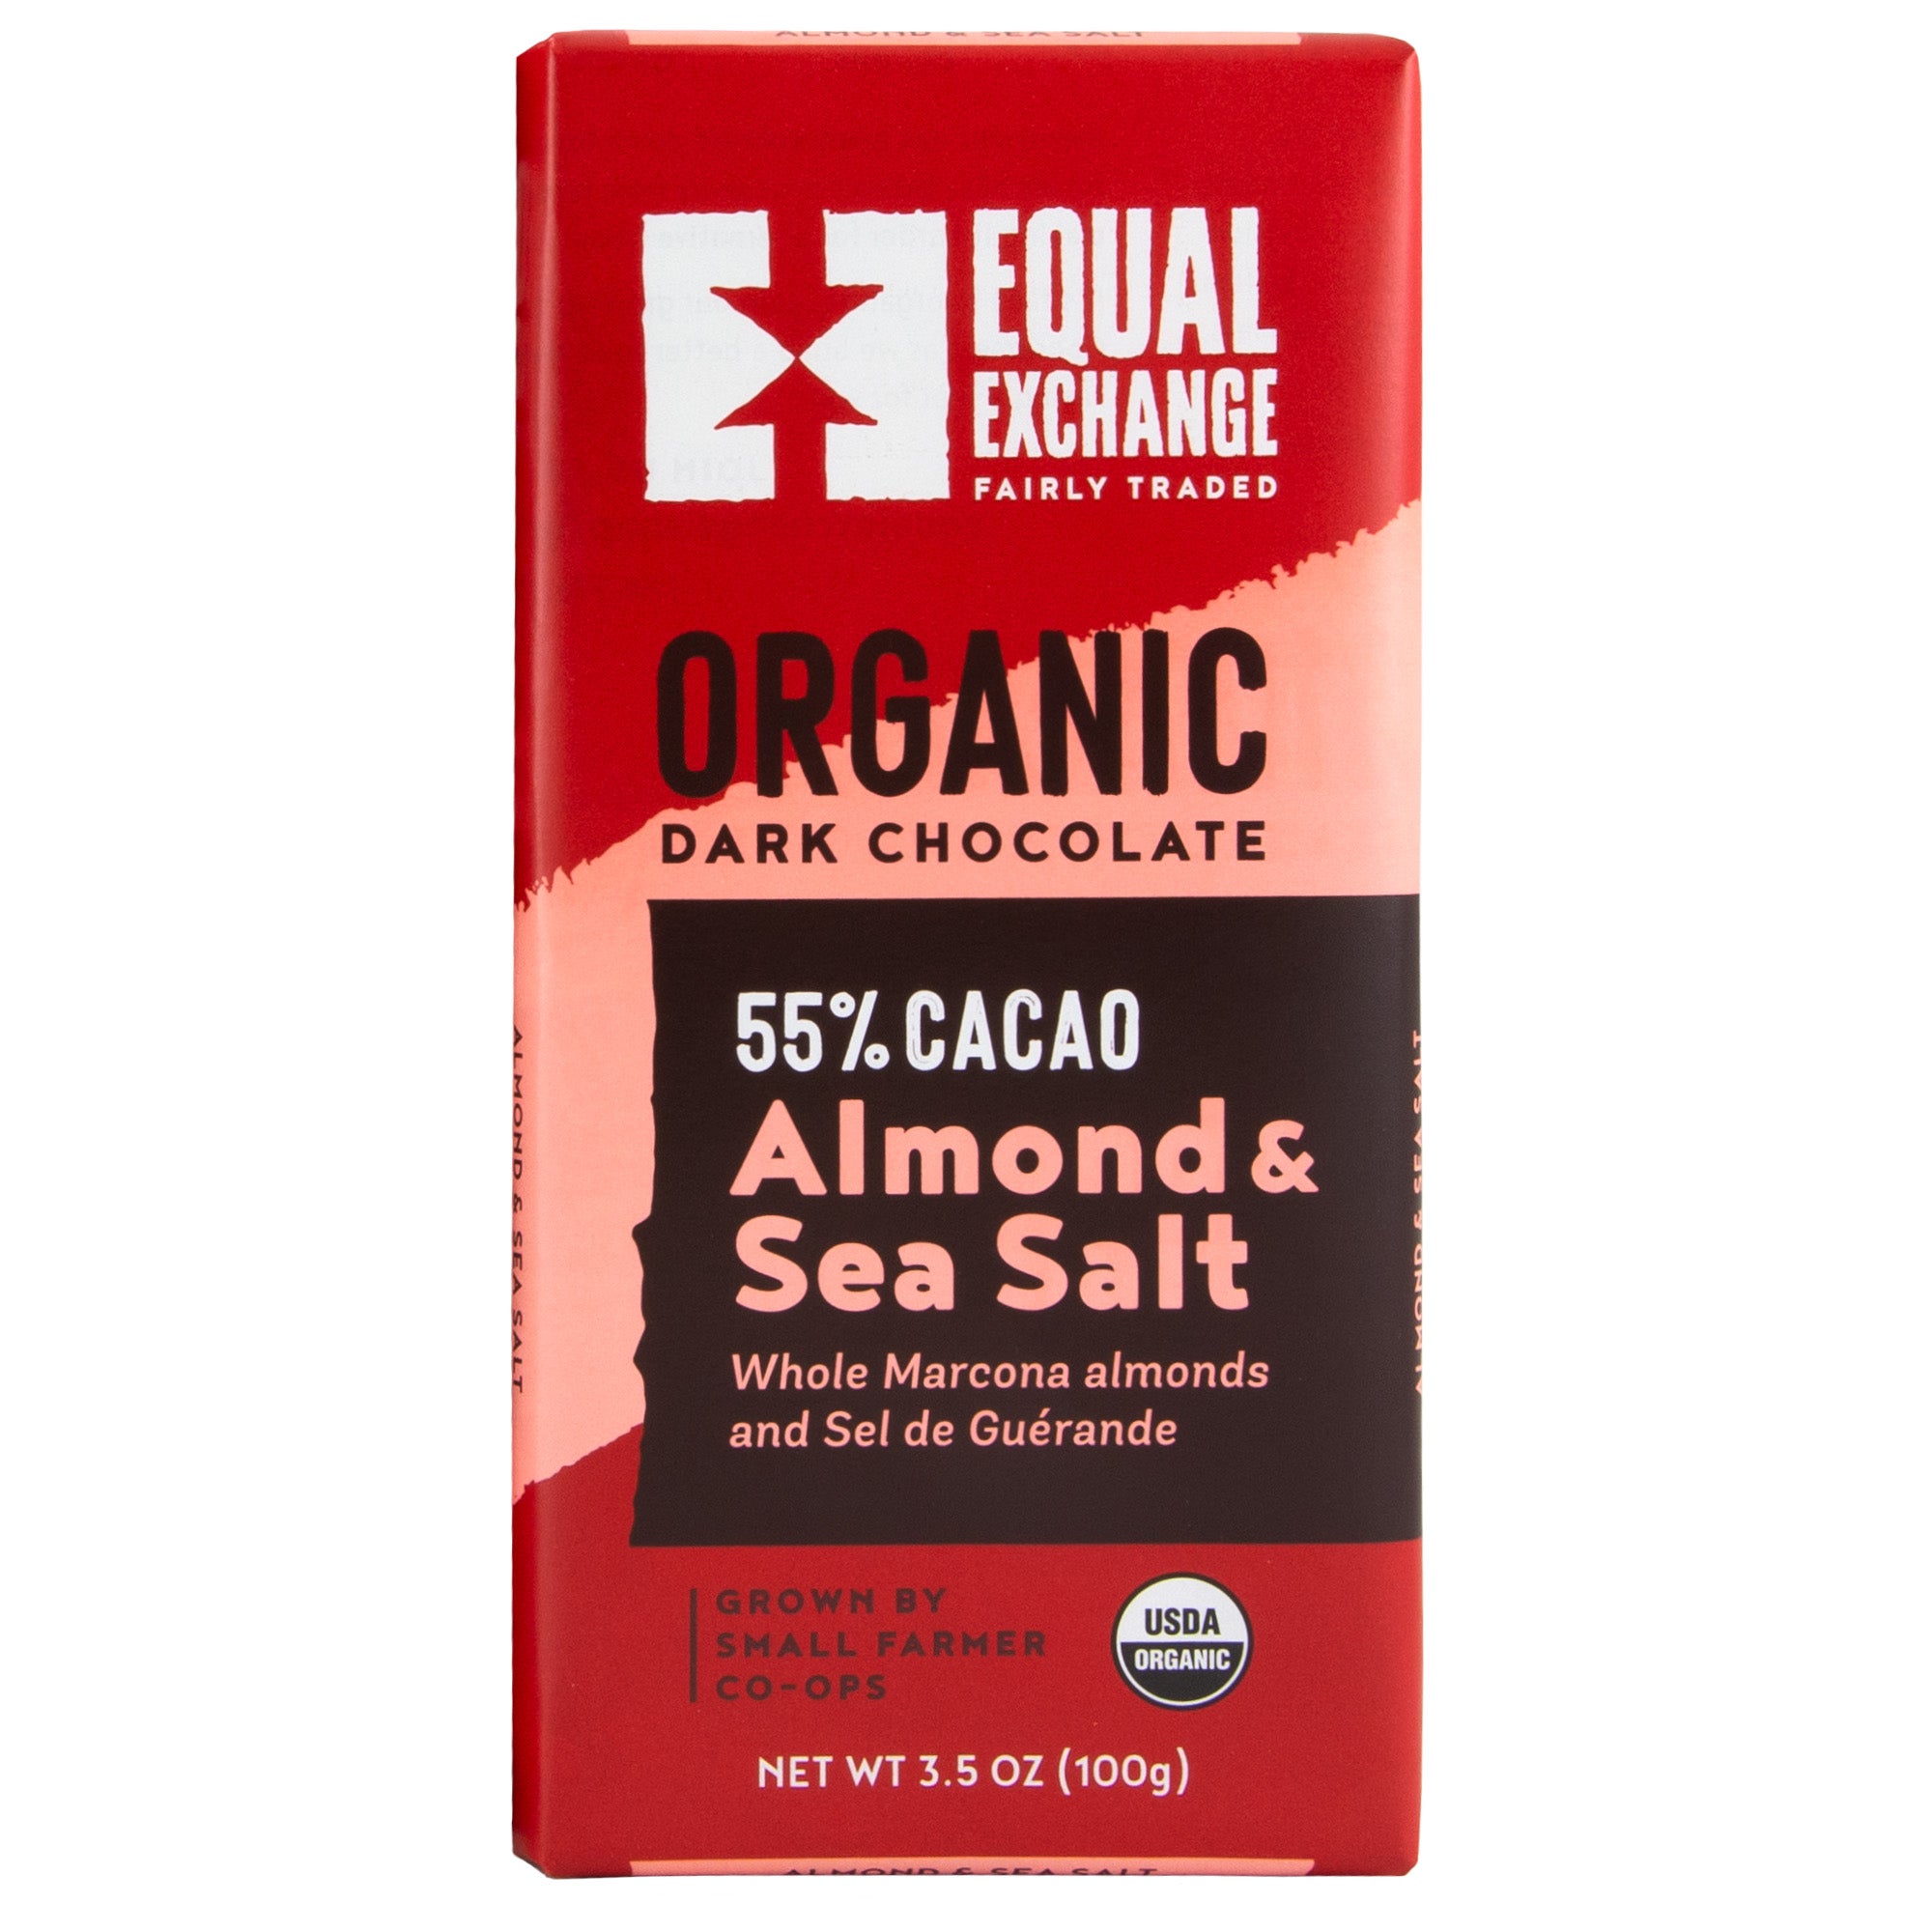 Almond & Sea Salt Organic Dark Chocolate - Equal Exchange -3.5 oz